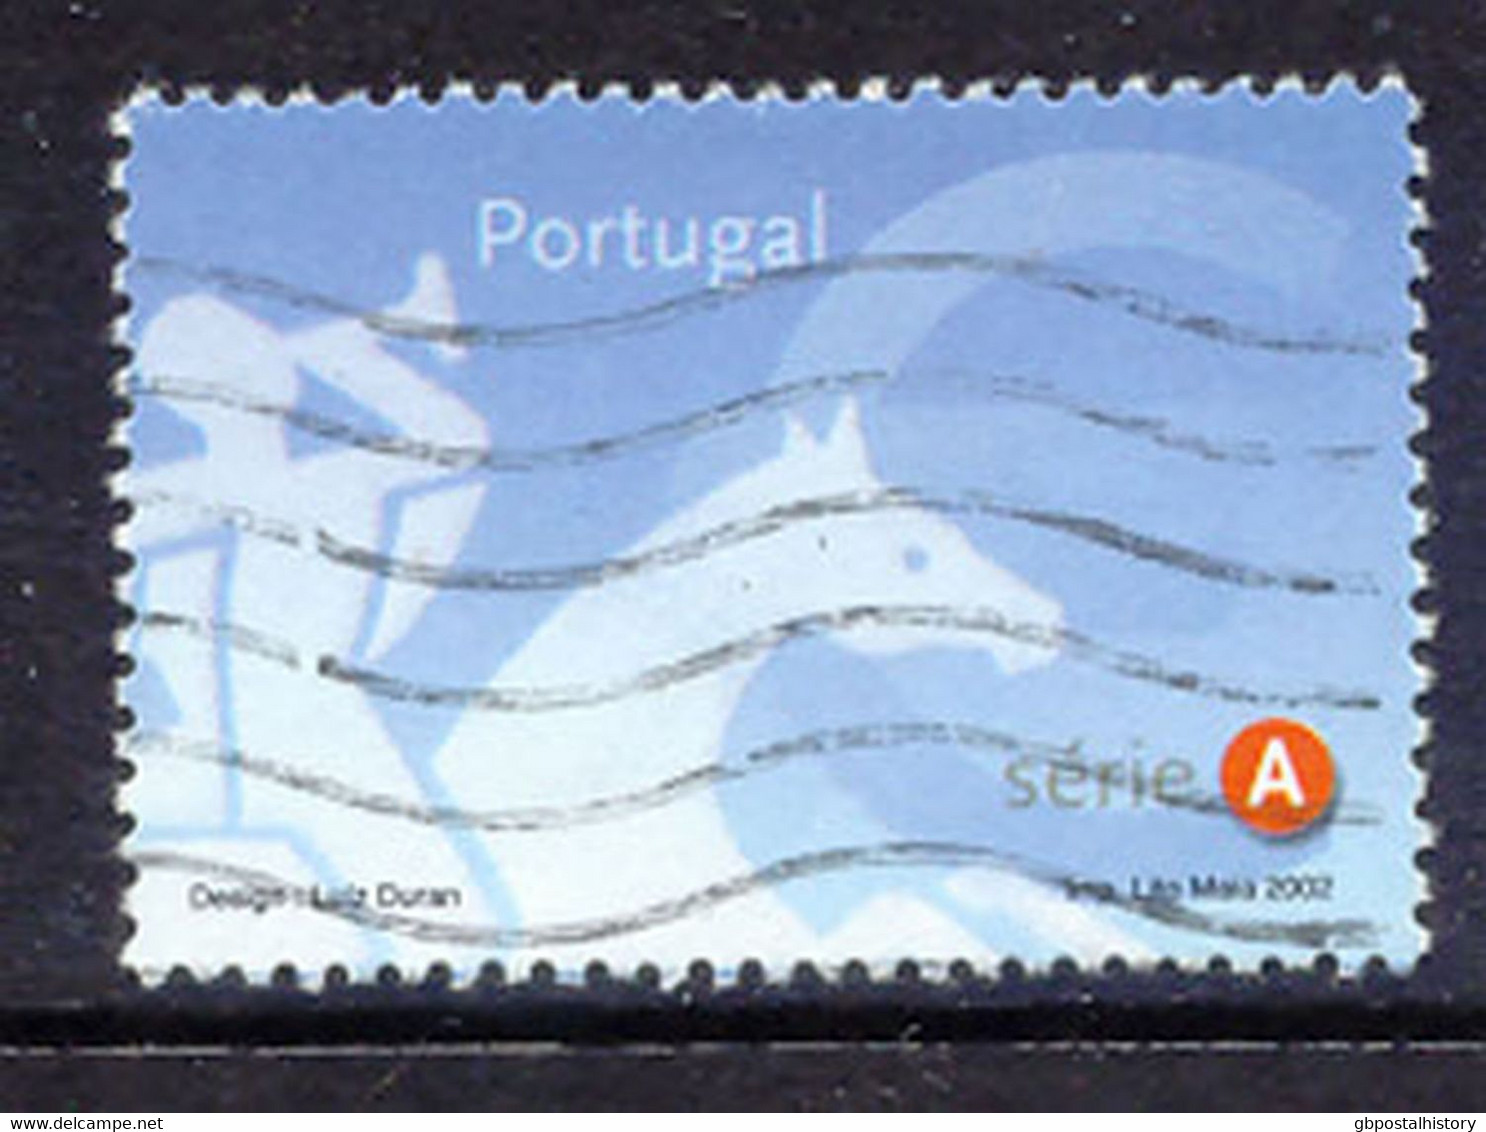 PORTUGAL 2002, Postemblem - (€), MAJOR VARIETY (Michel So Far Unknown) VFU - Usado